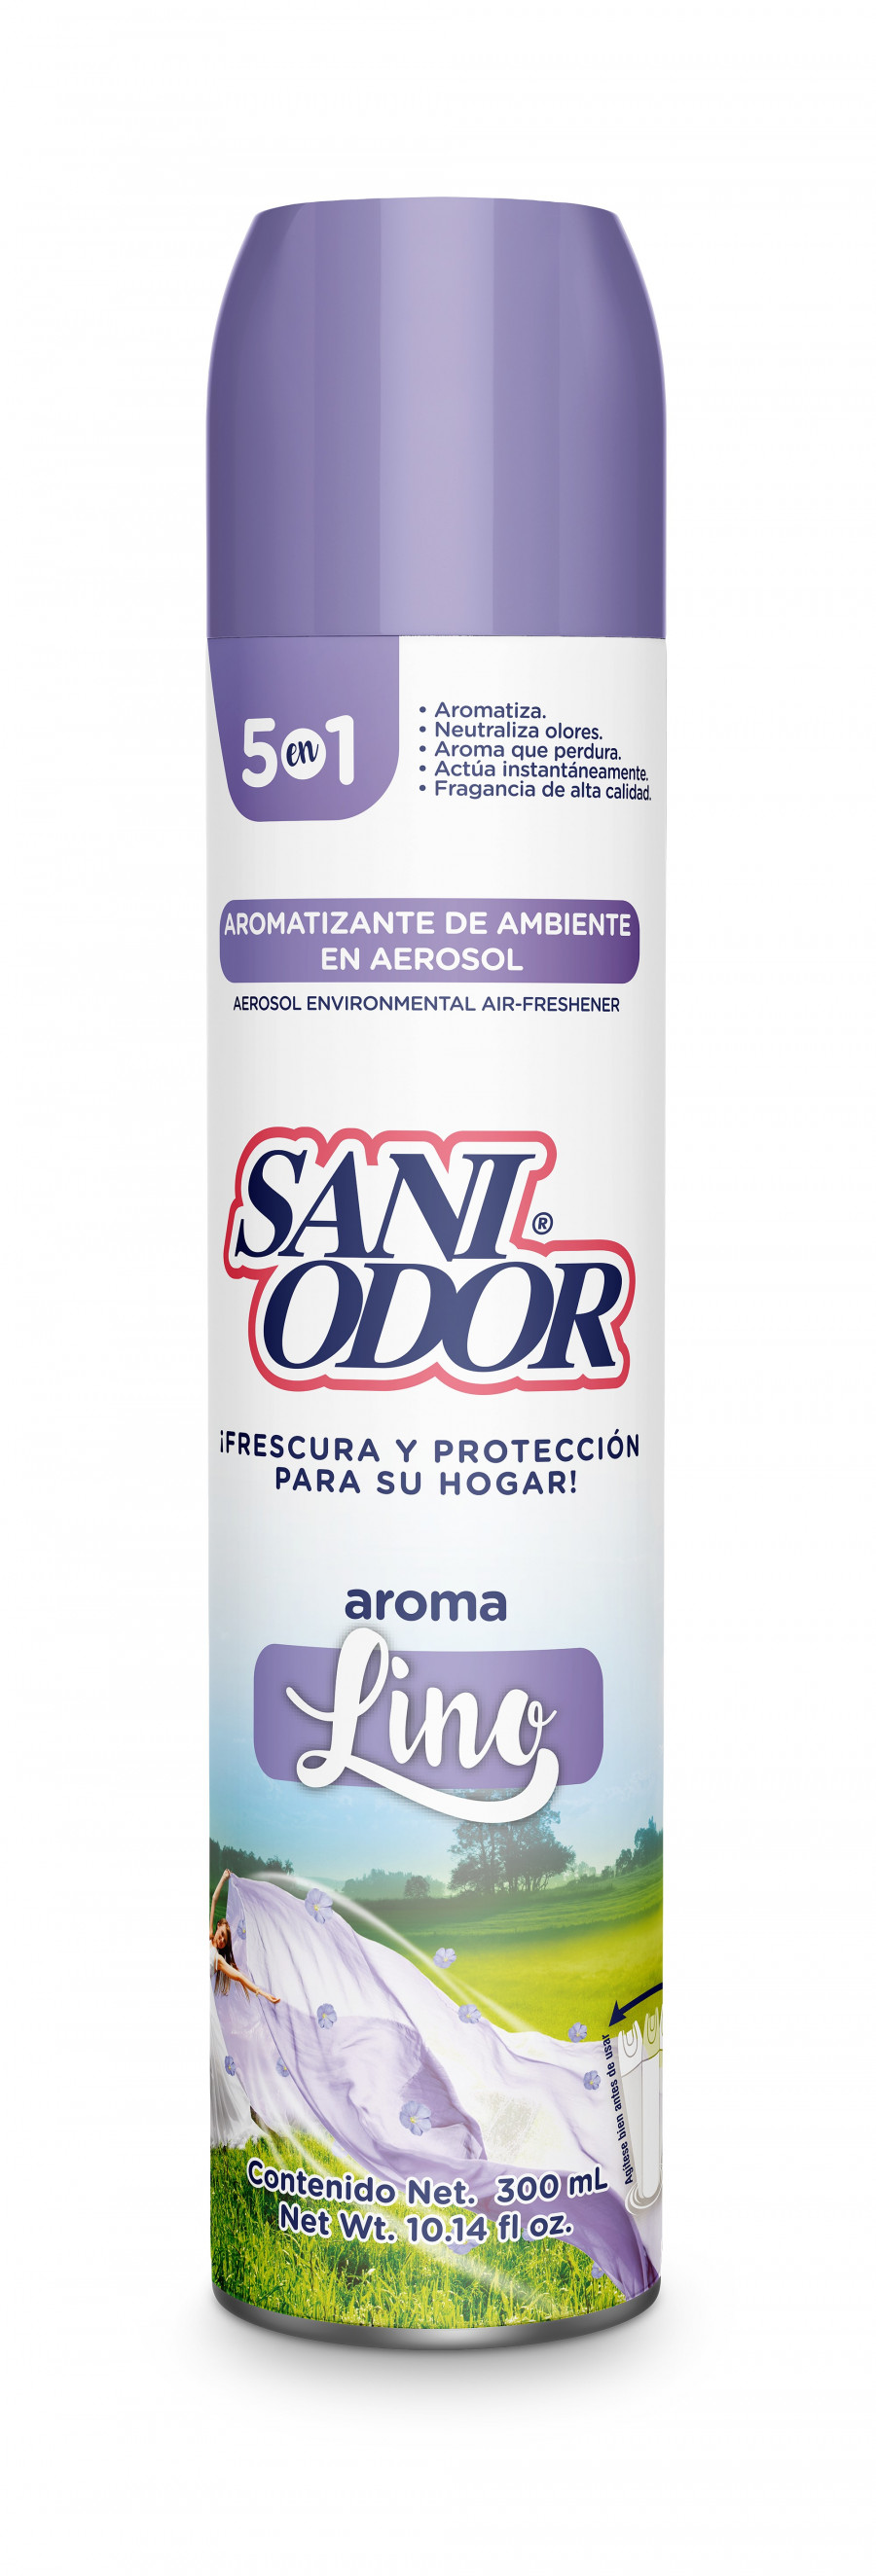 Ambiental aer 300ml Sani Odor Lino C12 #6111